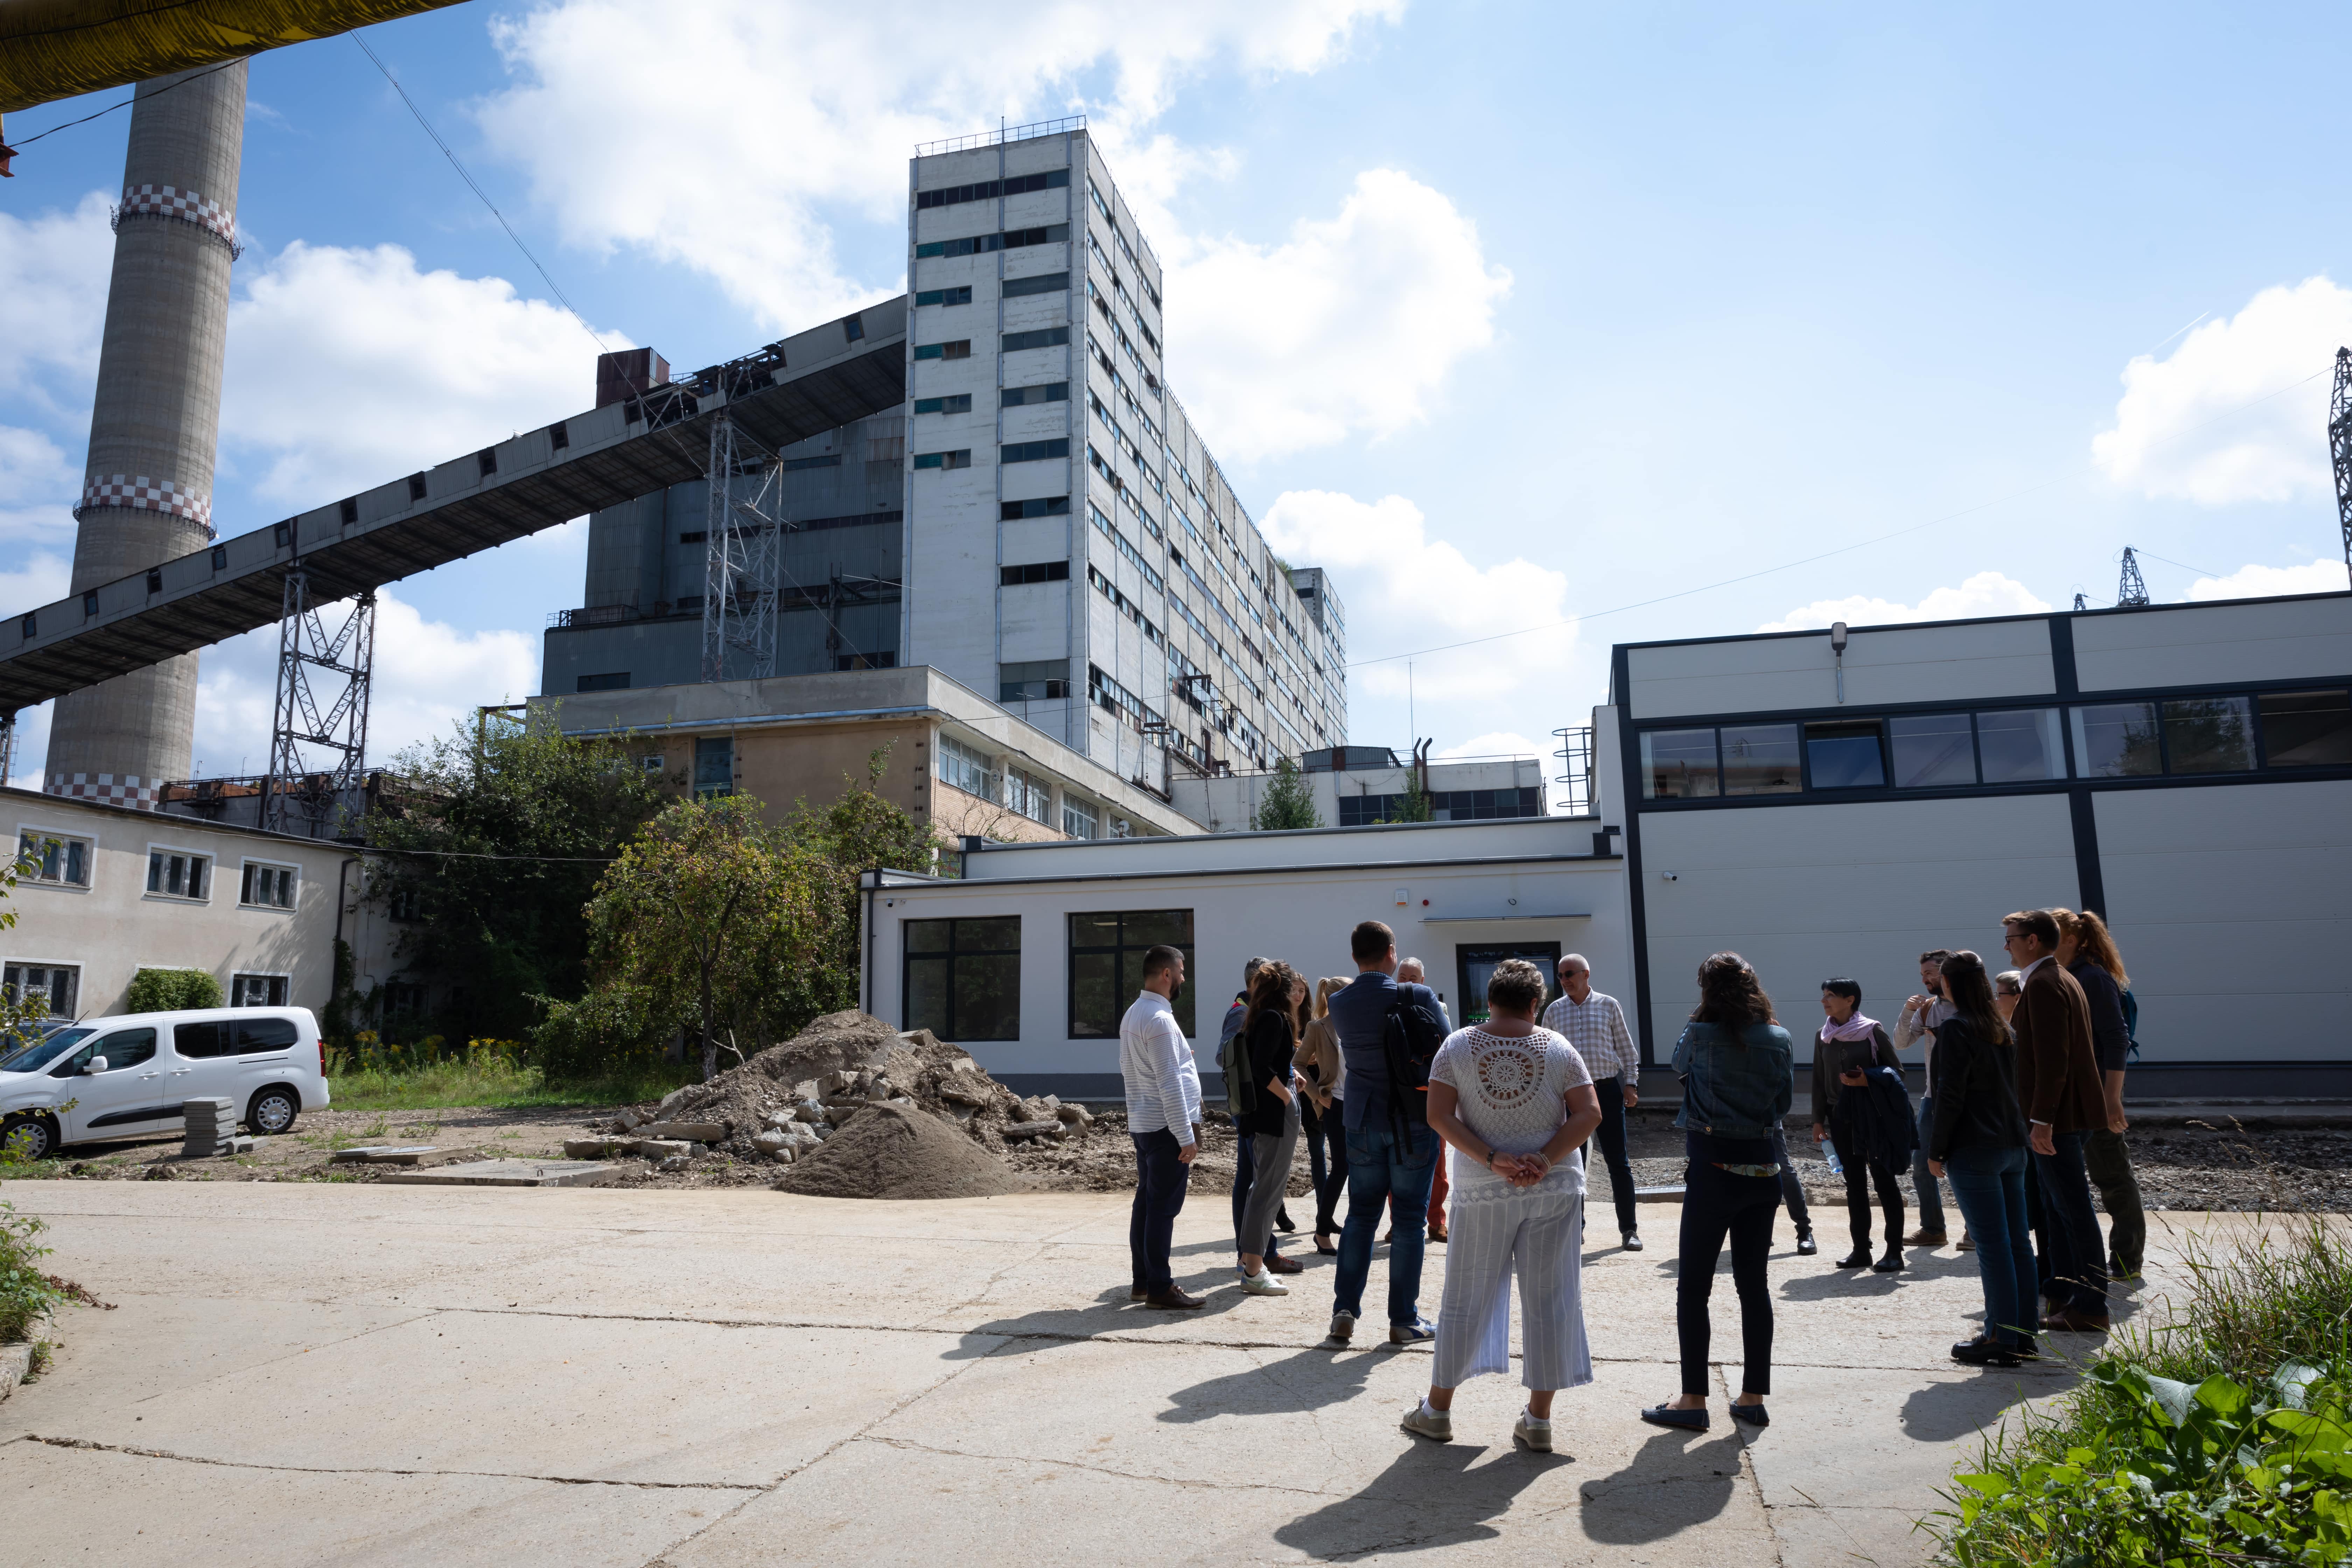 TOMORROW delegation visits old coal power plant in Brasov